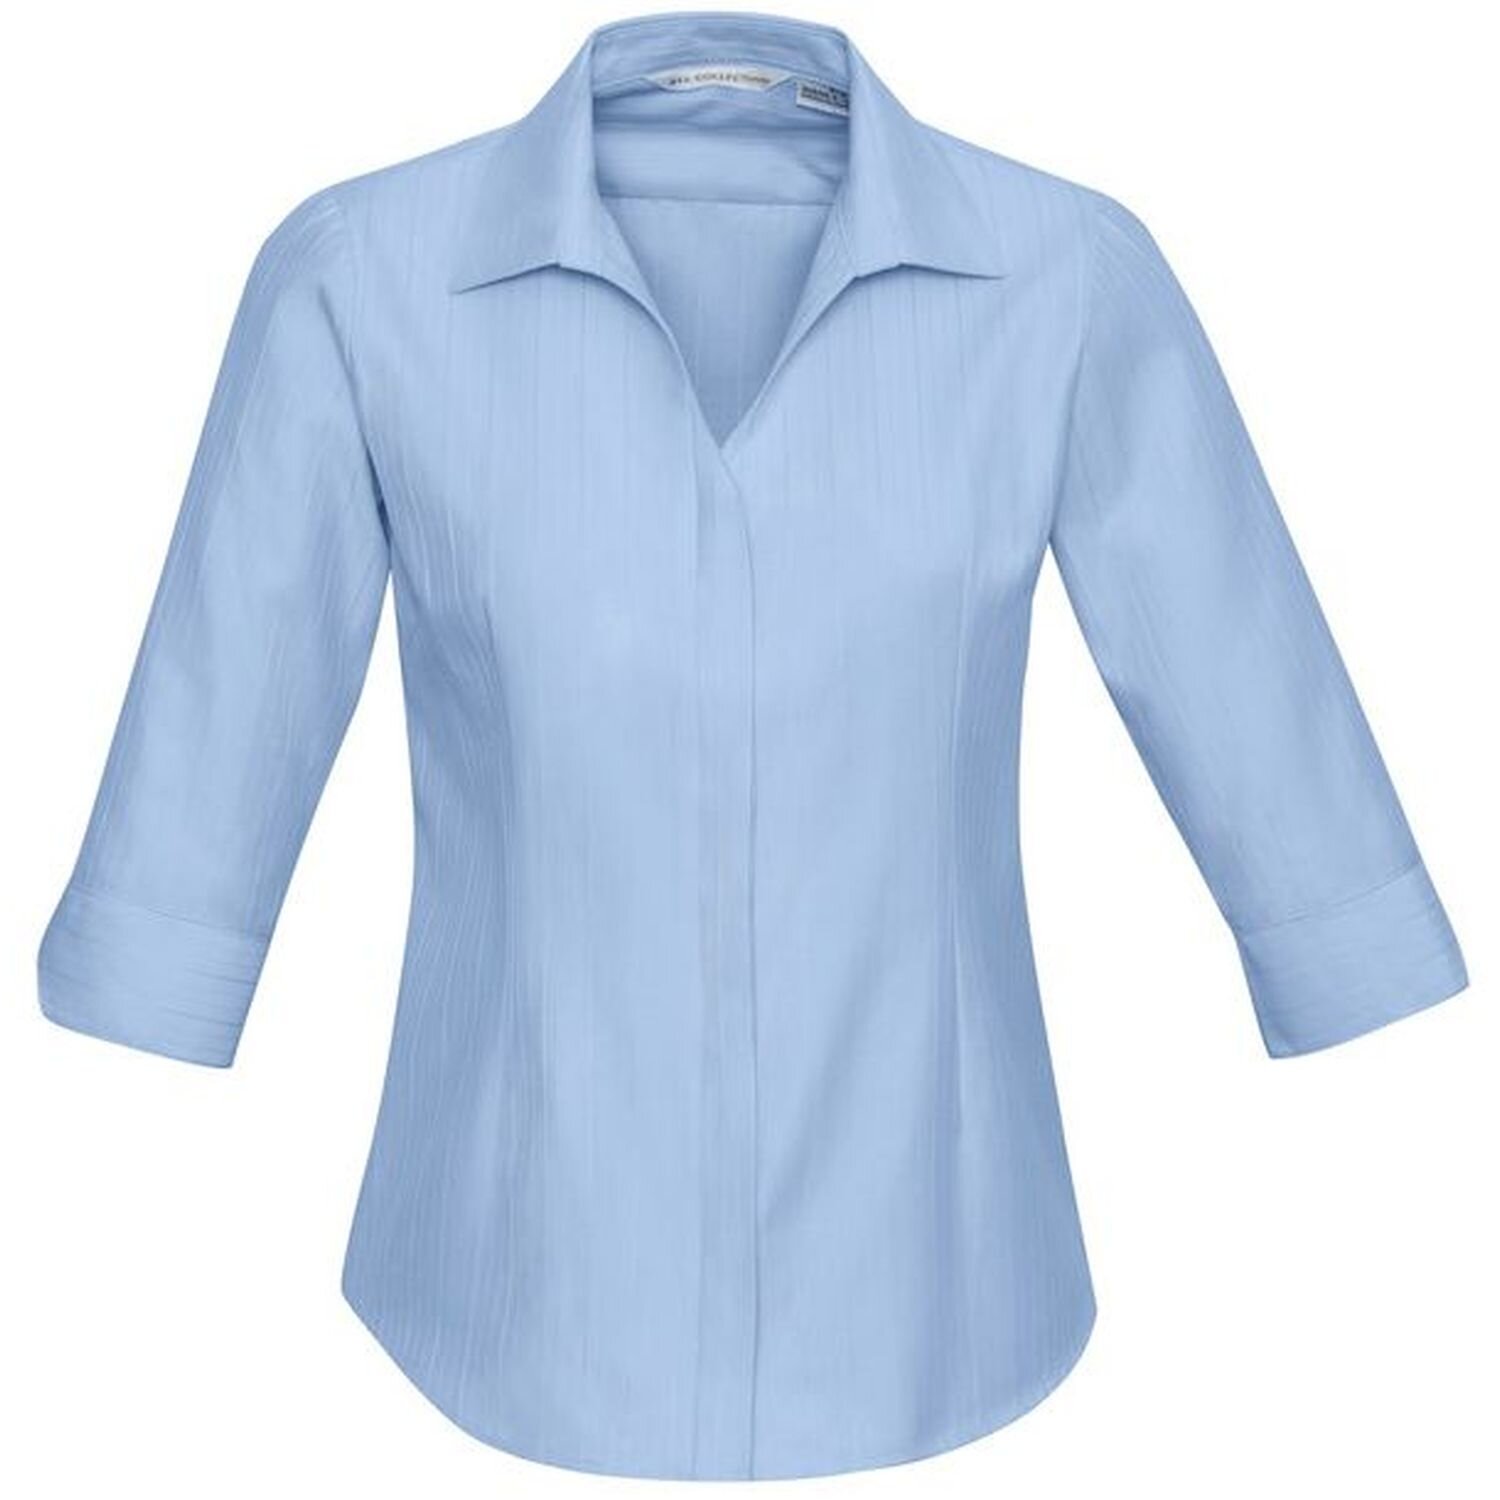 Ladies 3/4 Sleeve Preston Polycotton Shirt